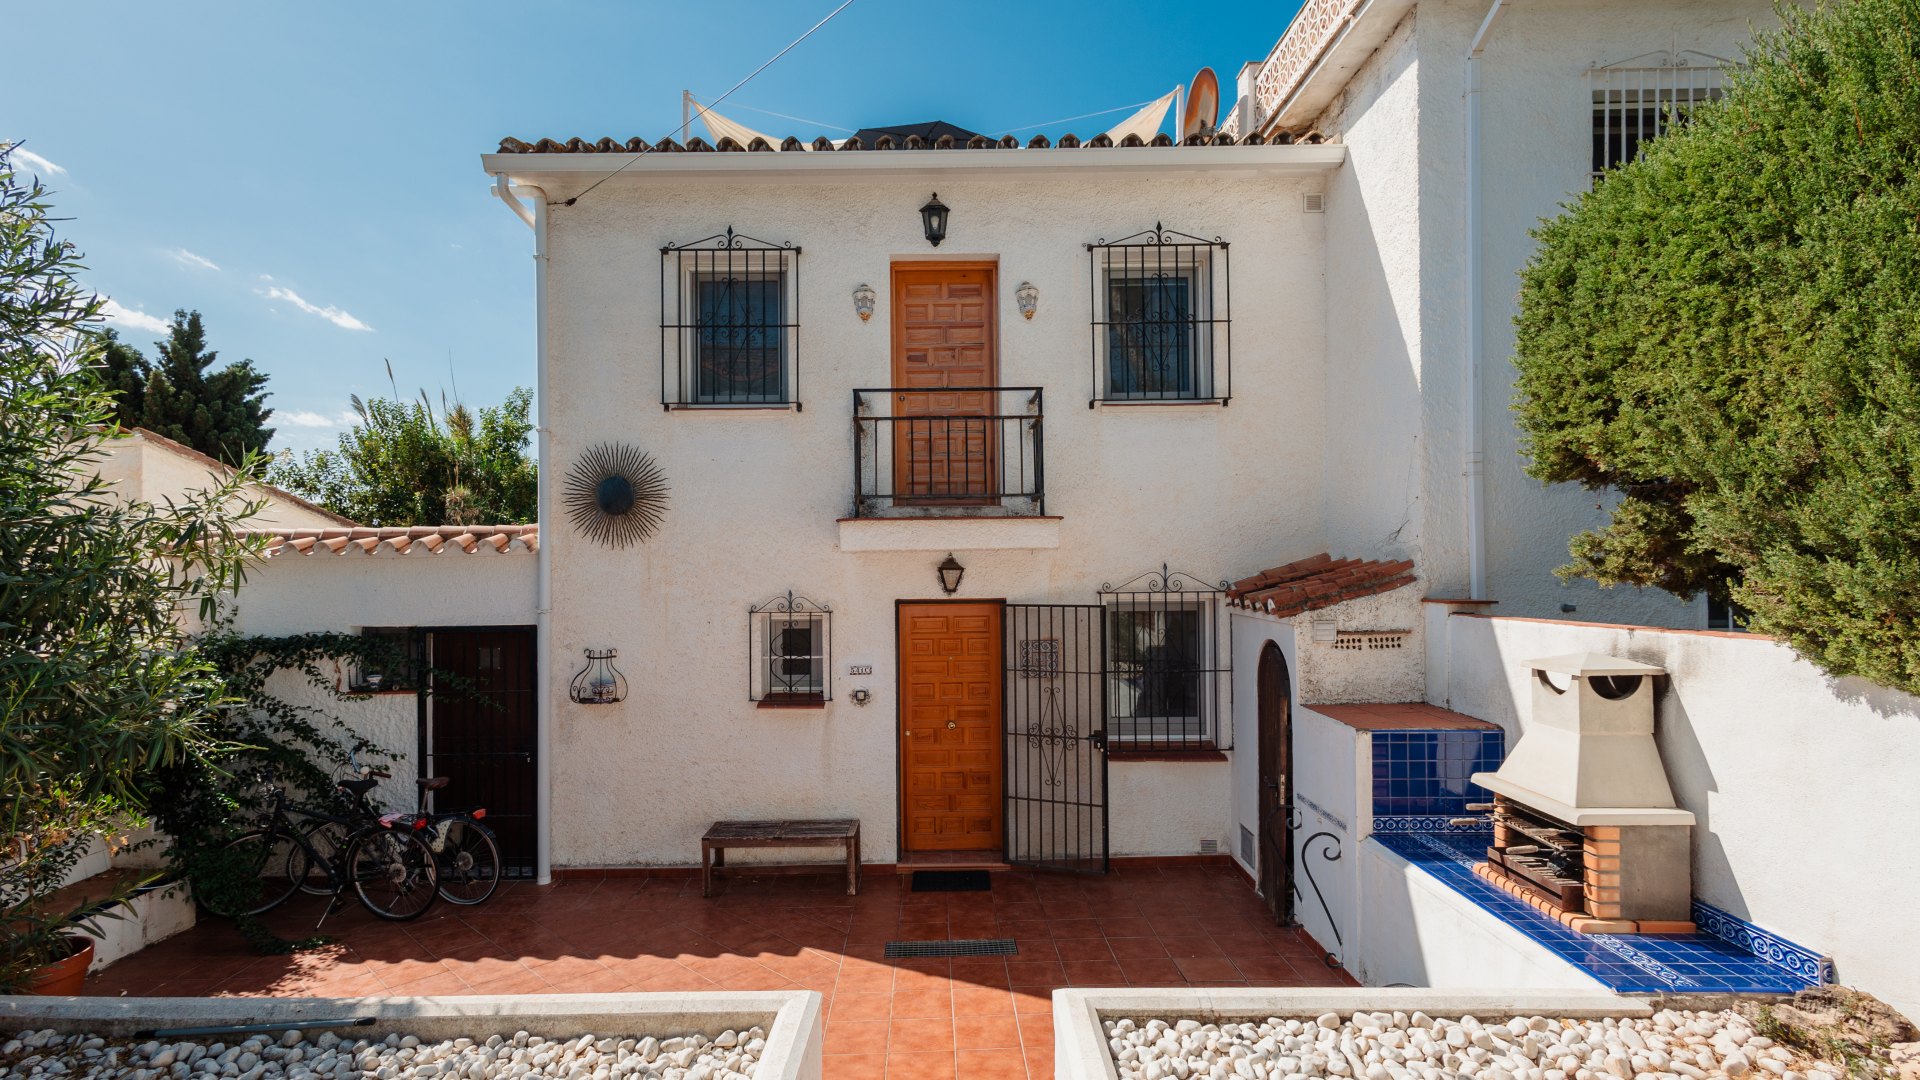 Semi Detached House zur kurzzeitmiete in Costabella, Marbella Ost